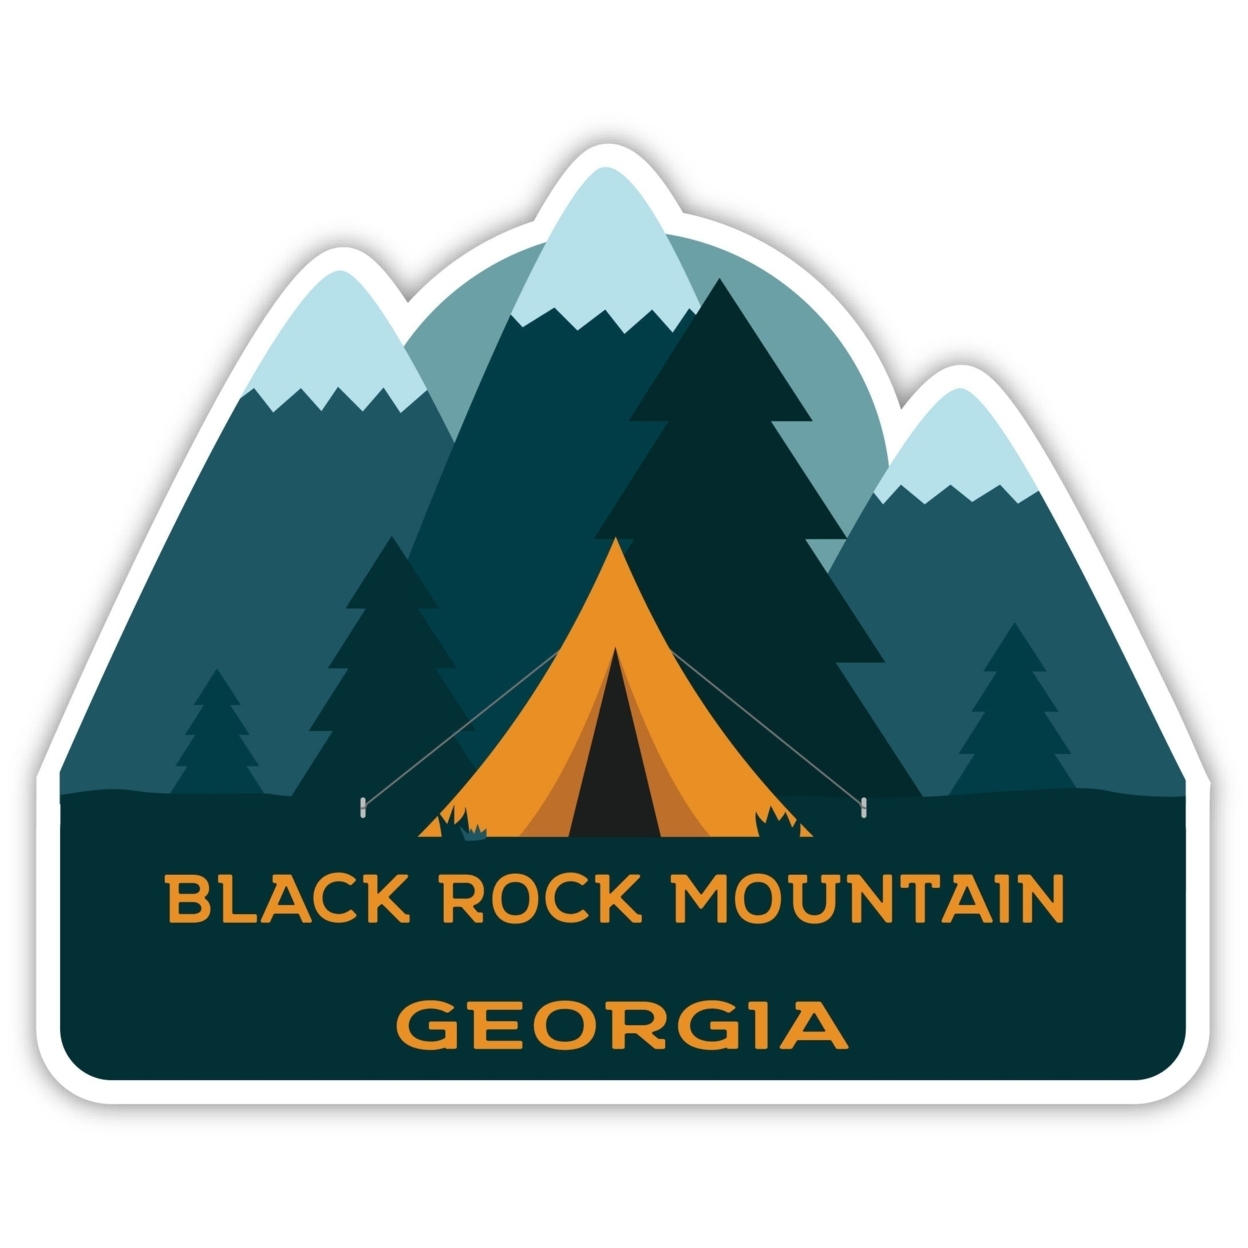 Black Rock Mountain Georgia Souvenir Decorative Stickers (Choose Theme And Size) - Single Unit, 10-Inch, Tent